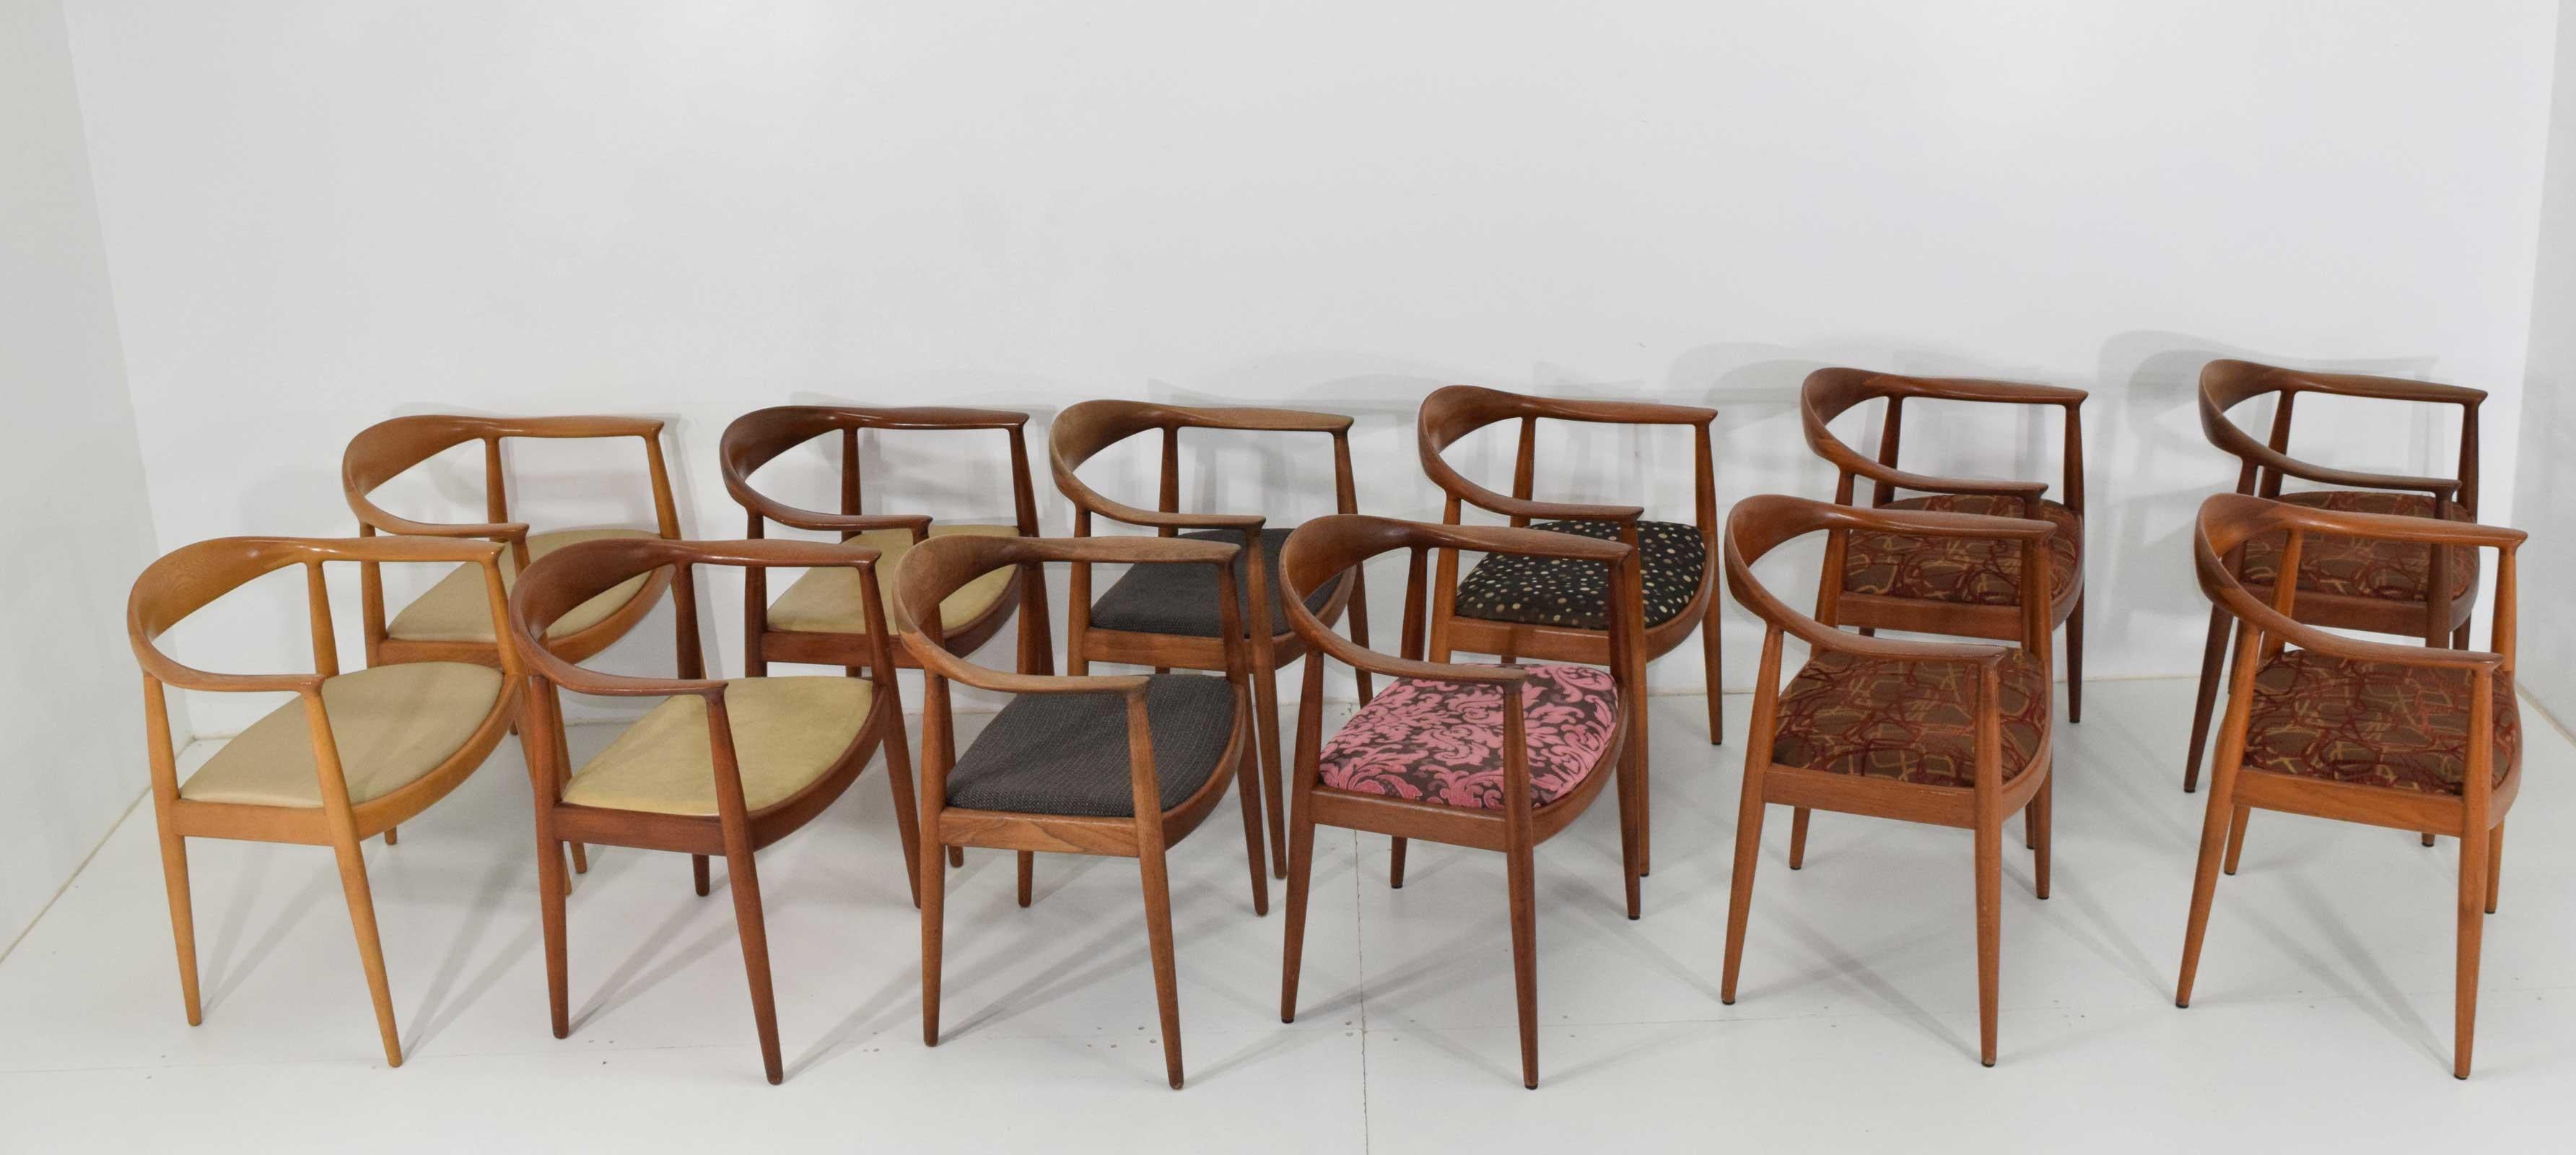 Mid-Century Modern Hans Wegner Round Chairs 8 Available